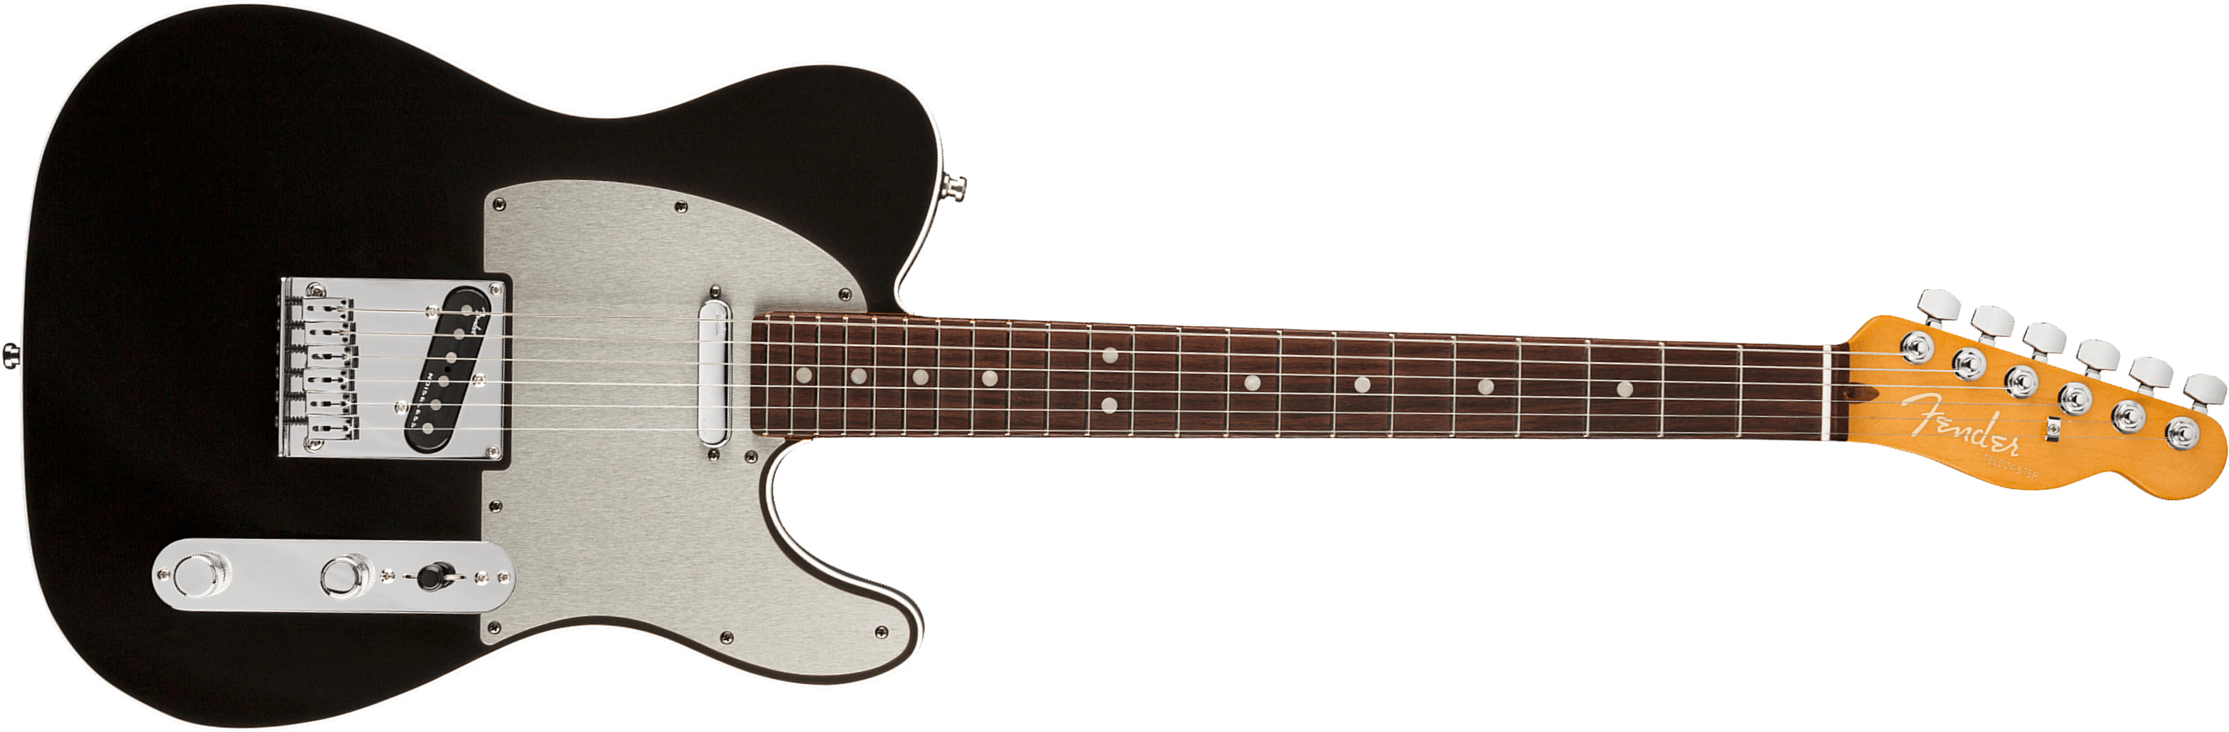 Fender Tele American Ultra 2019 Usa Rw - Texas Tea - Tel shape electric guitar - Main picture